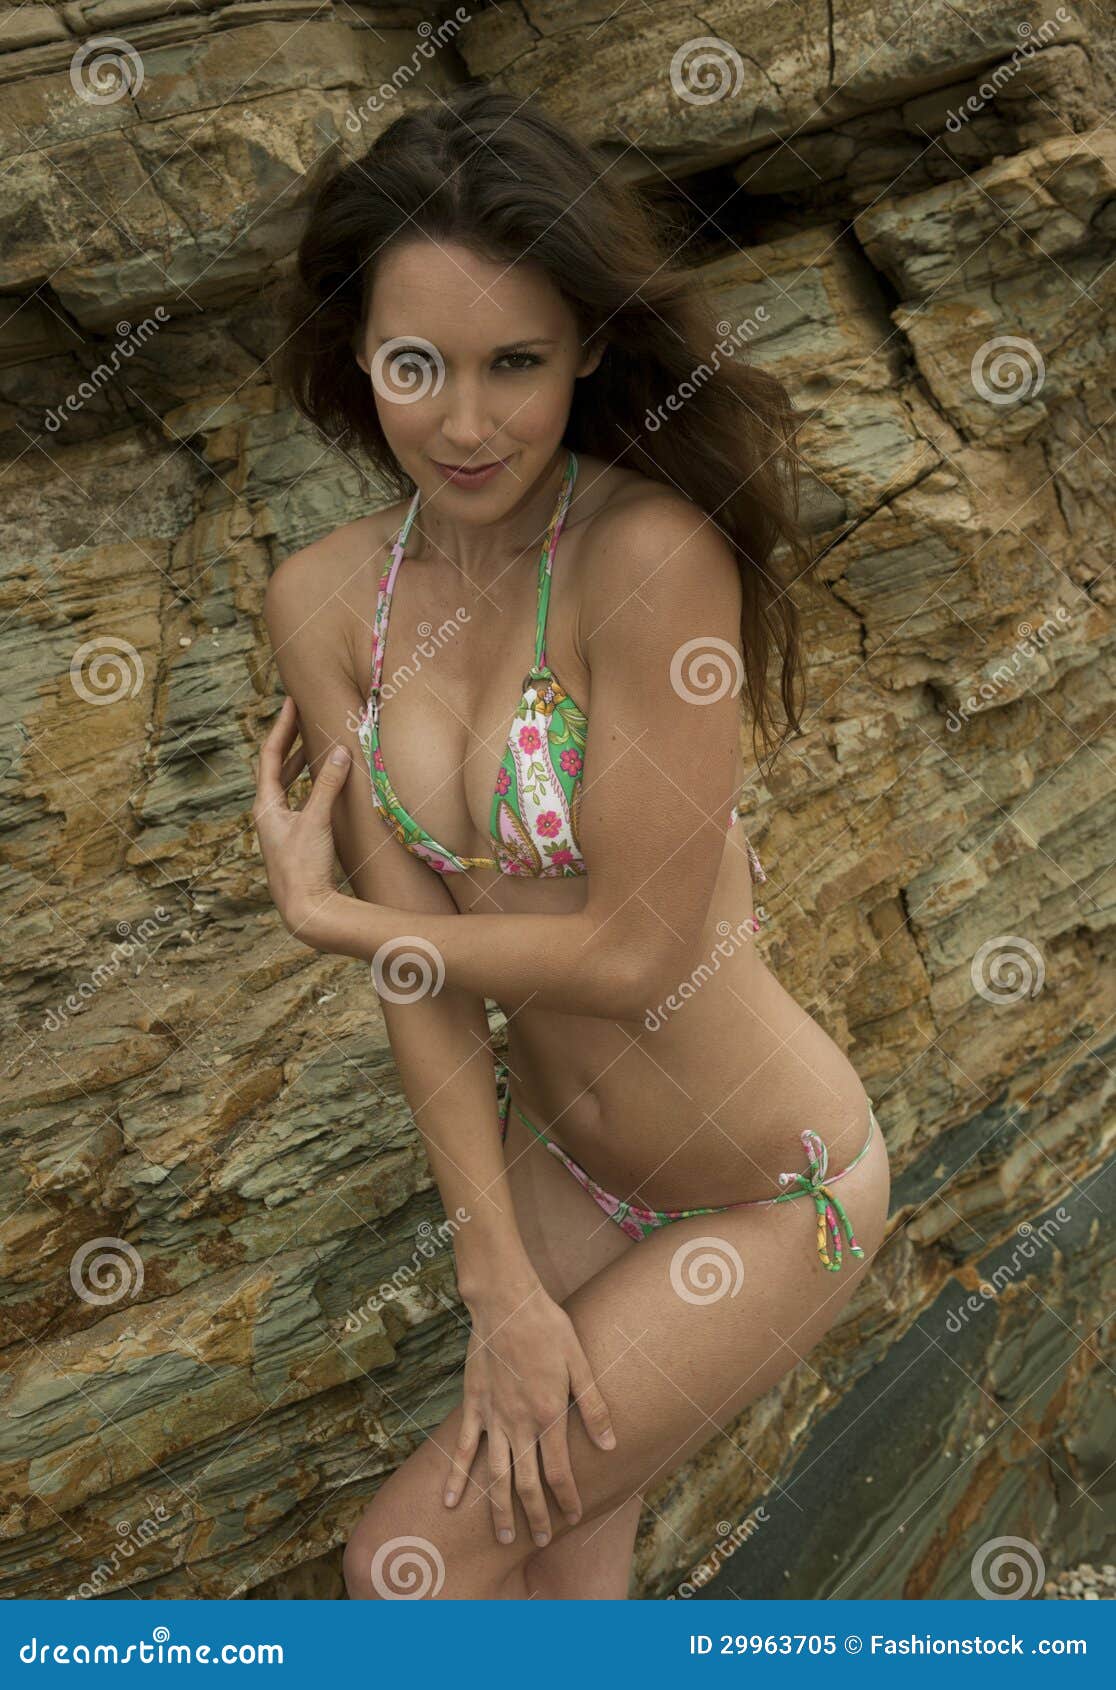 abby yusuf share hot brazilian women in bikinis photos